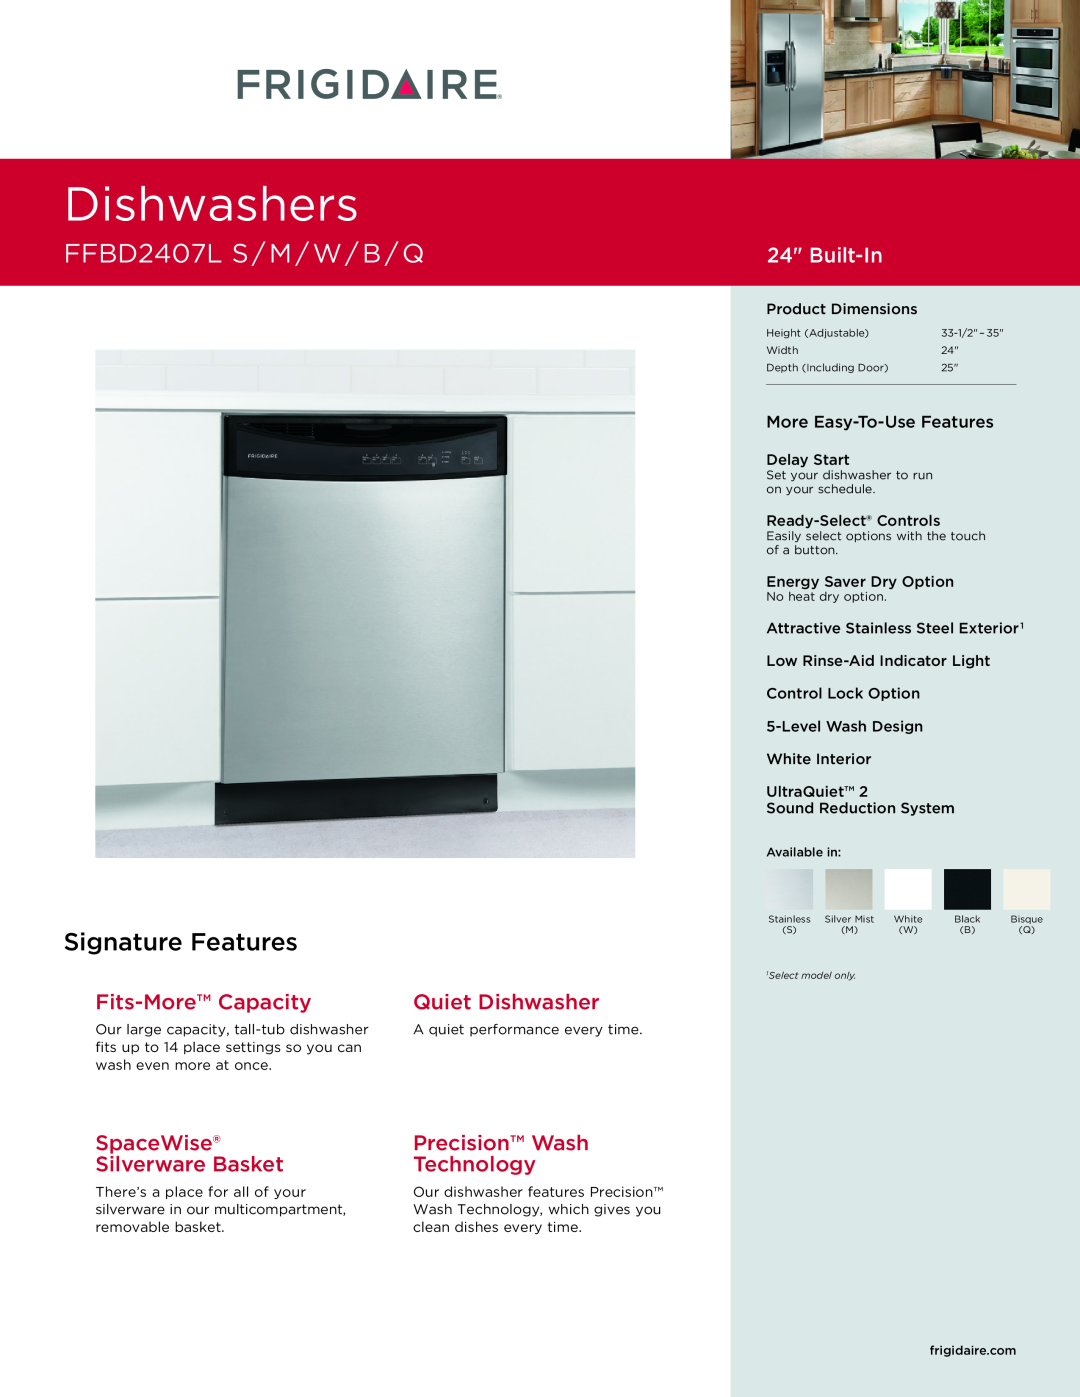 Frigidaire dimensions Dishwashersrop-In Cooktop, FFBD2407LPEC3085K S / M / W / B / Q, Signature Features, SpaceWise 